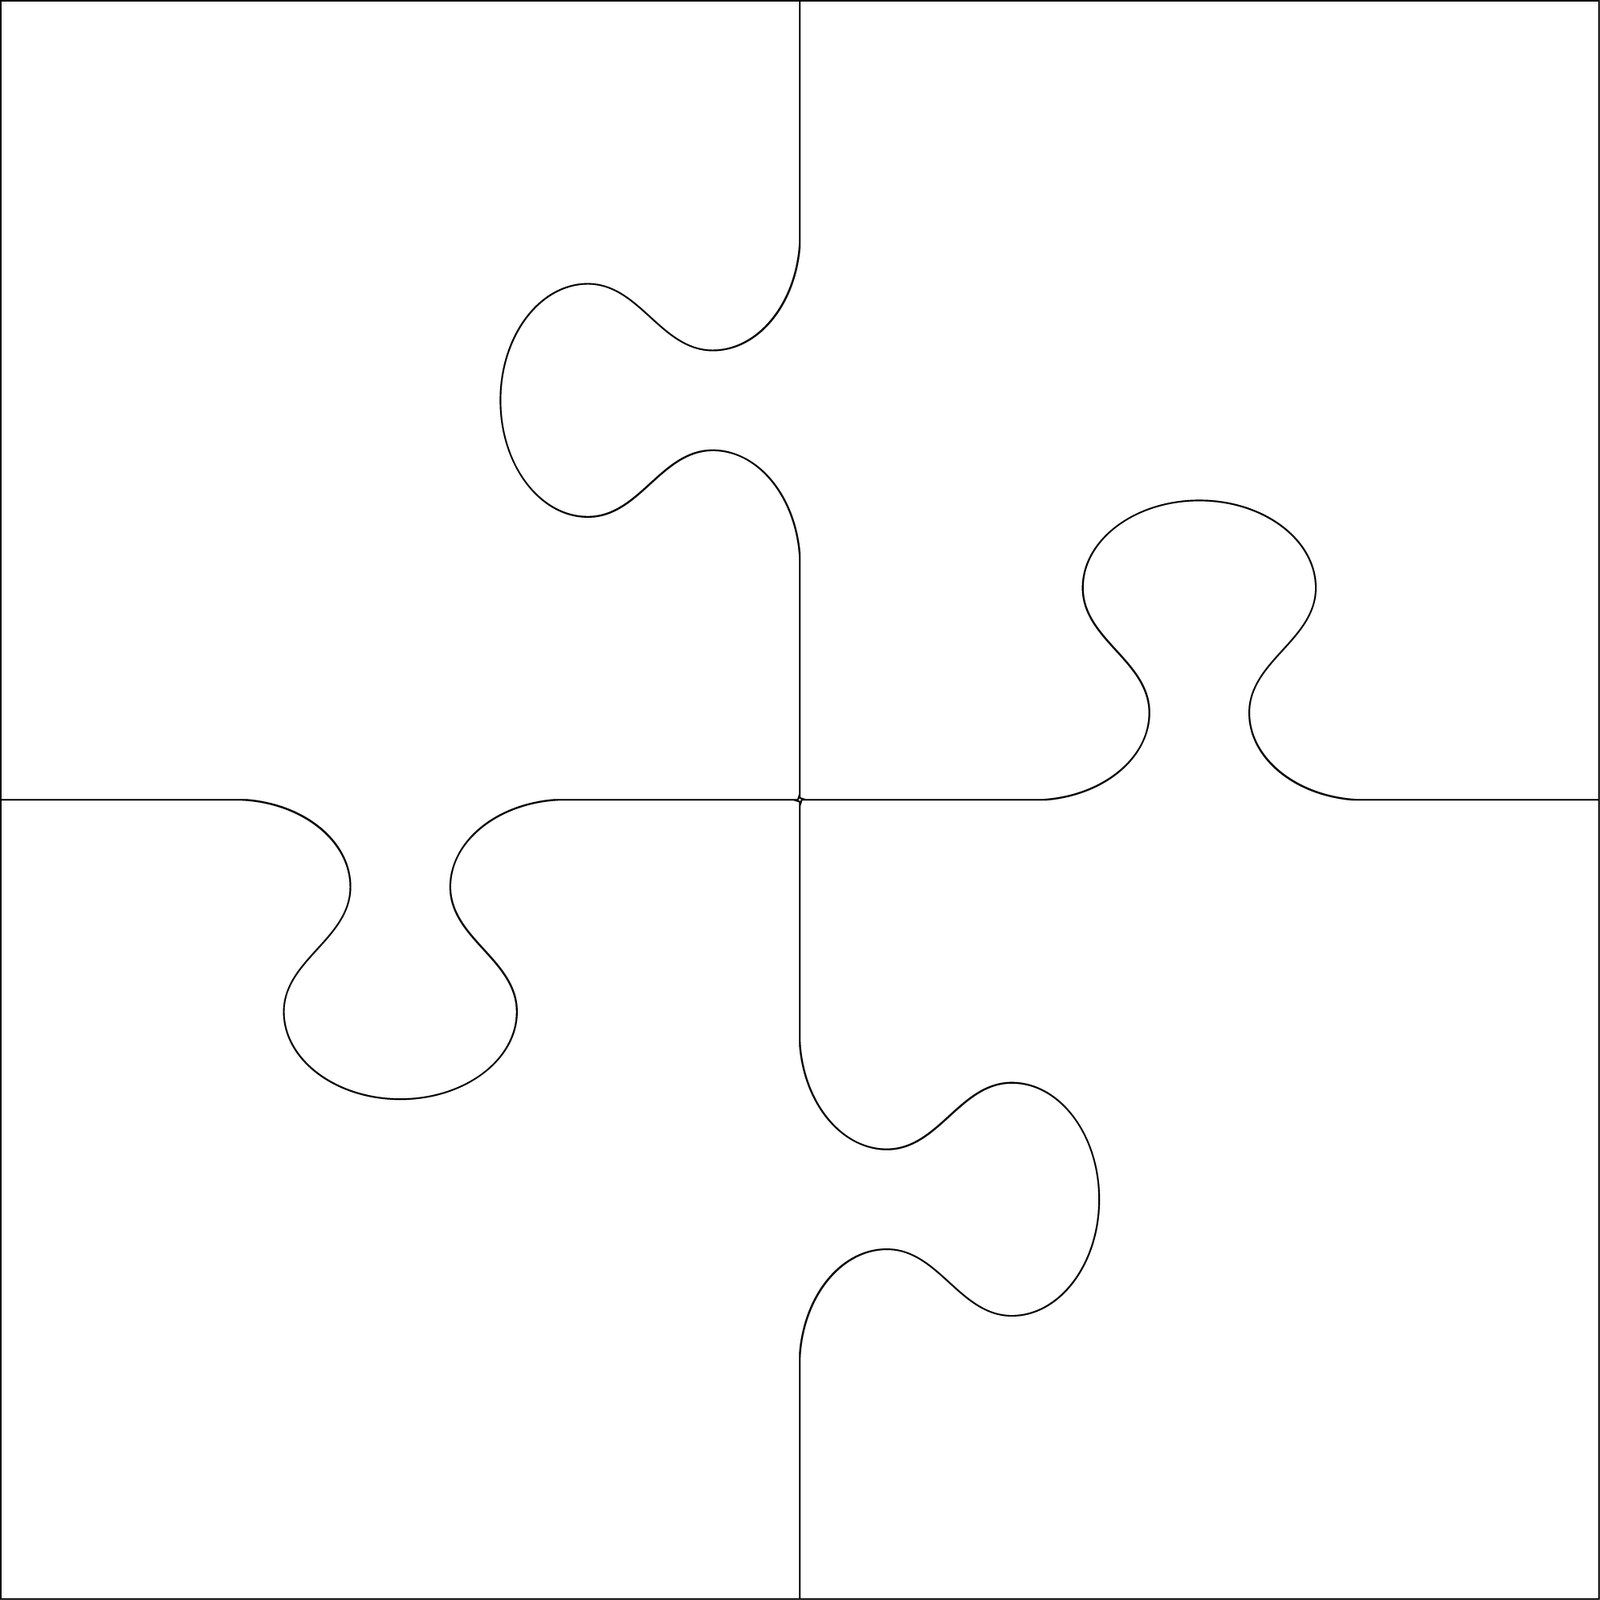 Puzzle Pieces Coloring Page